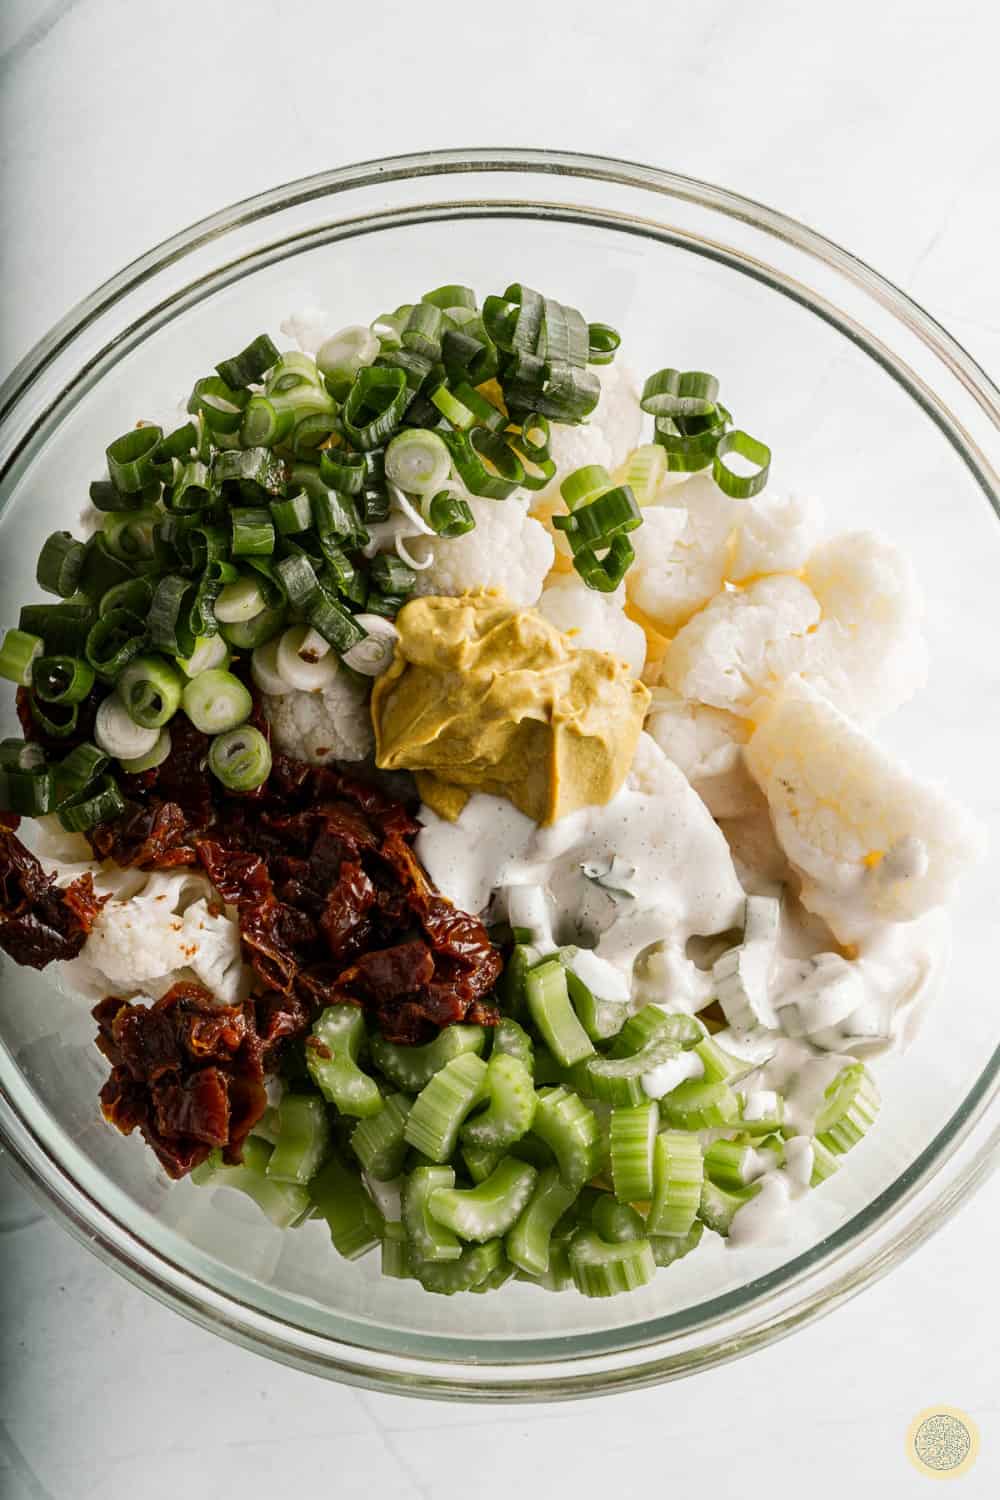 How to Make Cauliflower Salad